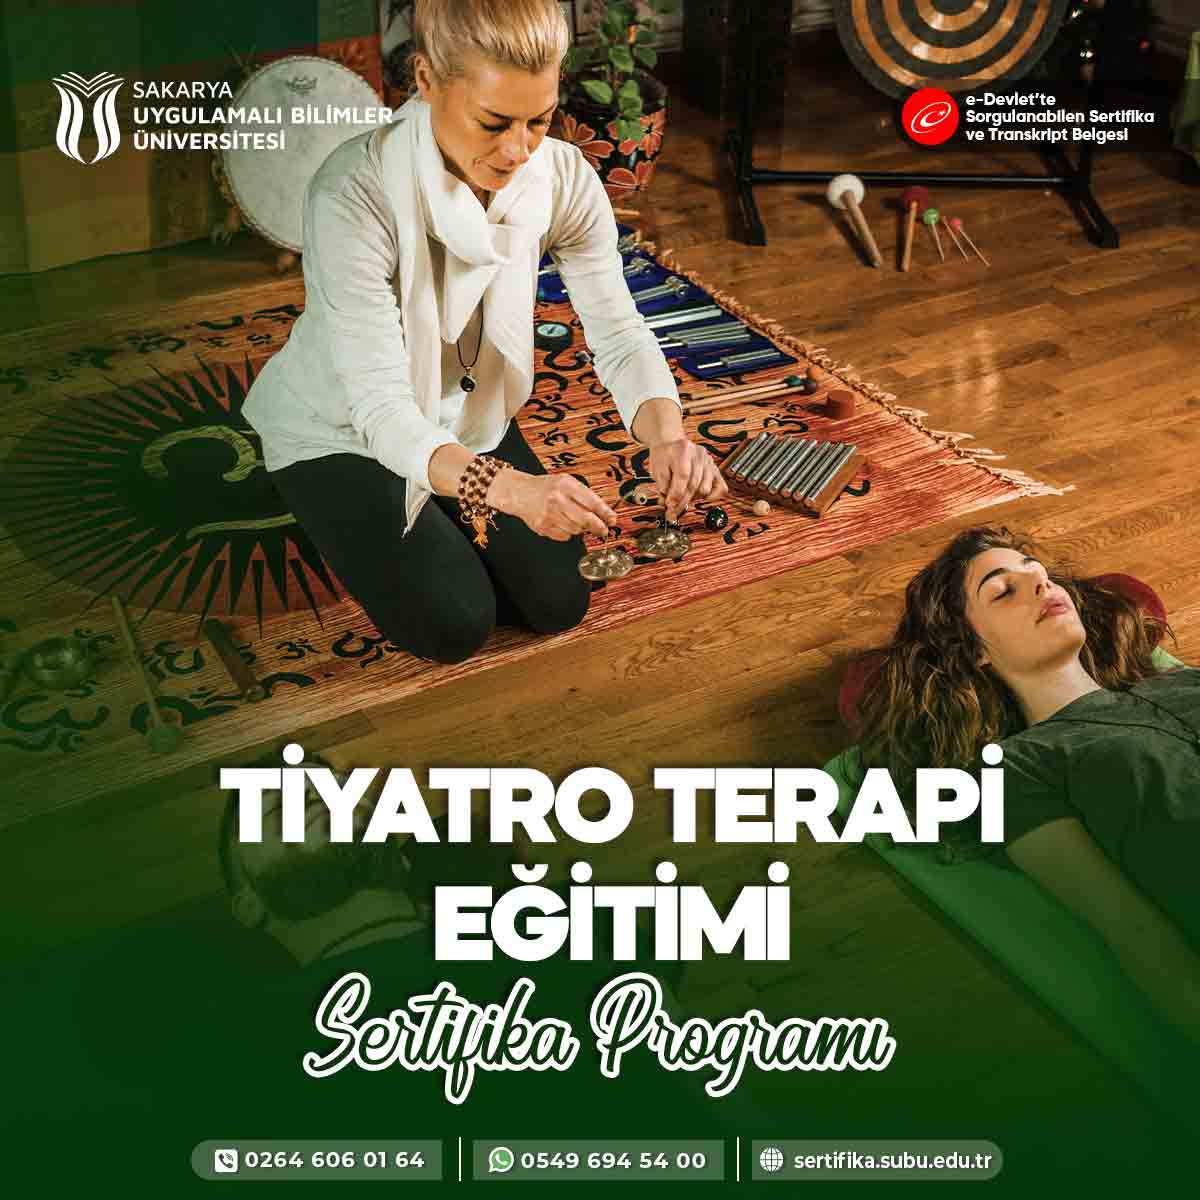 Tiyatro Terapi Eğitimi Sertifika Programı